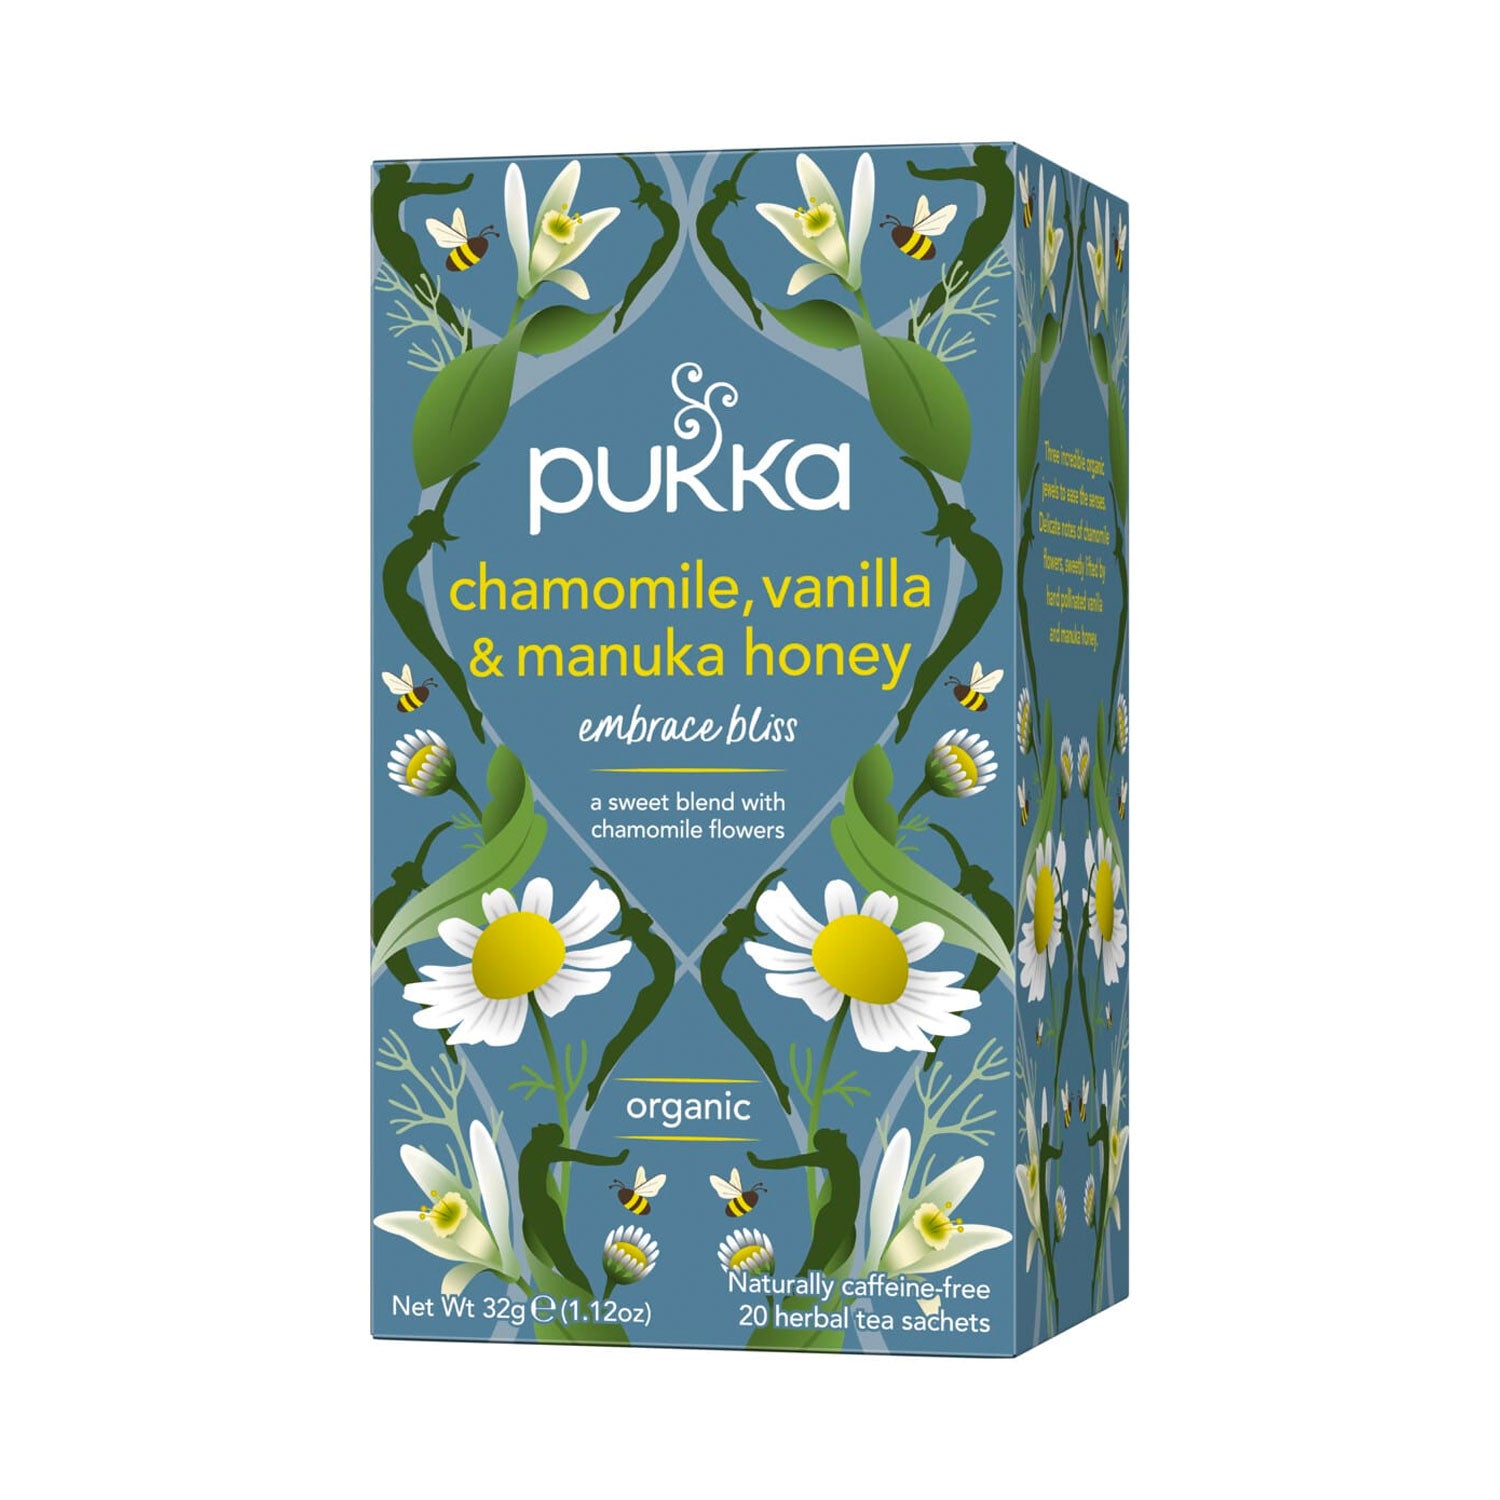 Se Pukka Chamomile, vanilla & Manuka honey organic - 20 stk - brev te hos Teago.dk